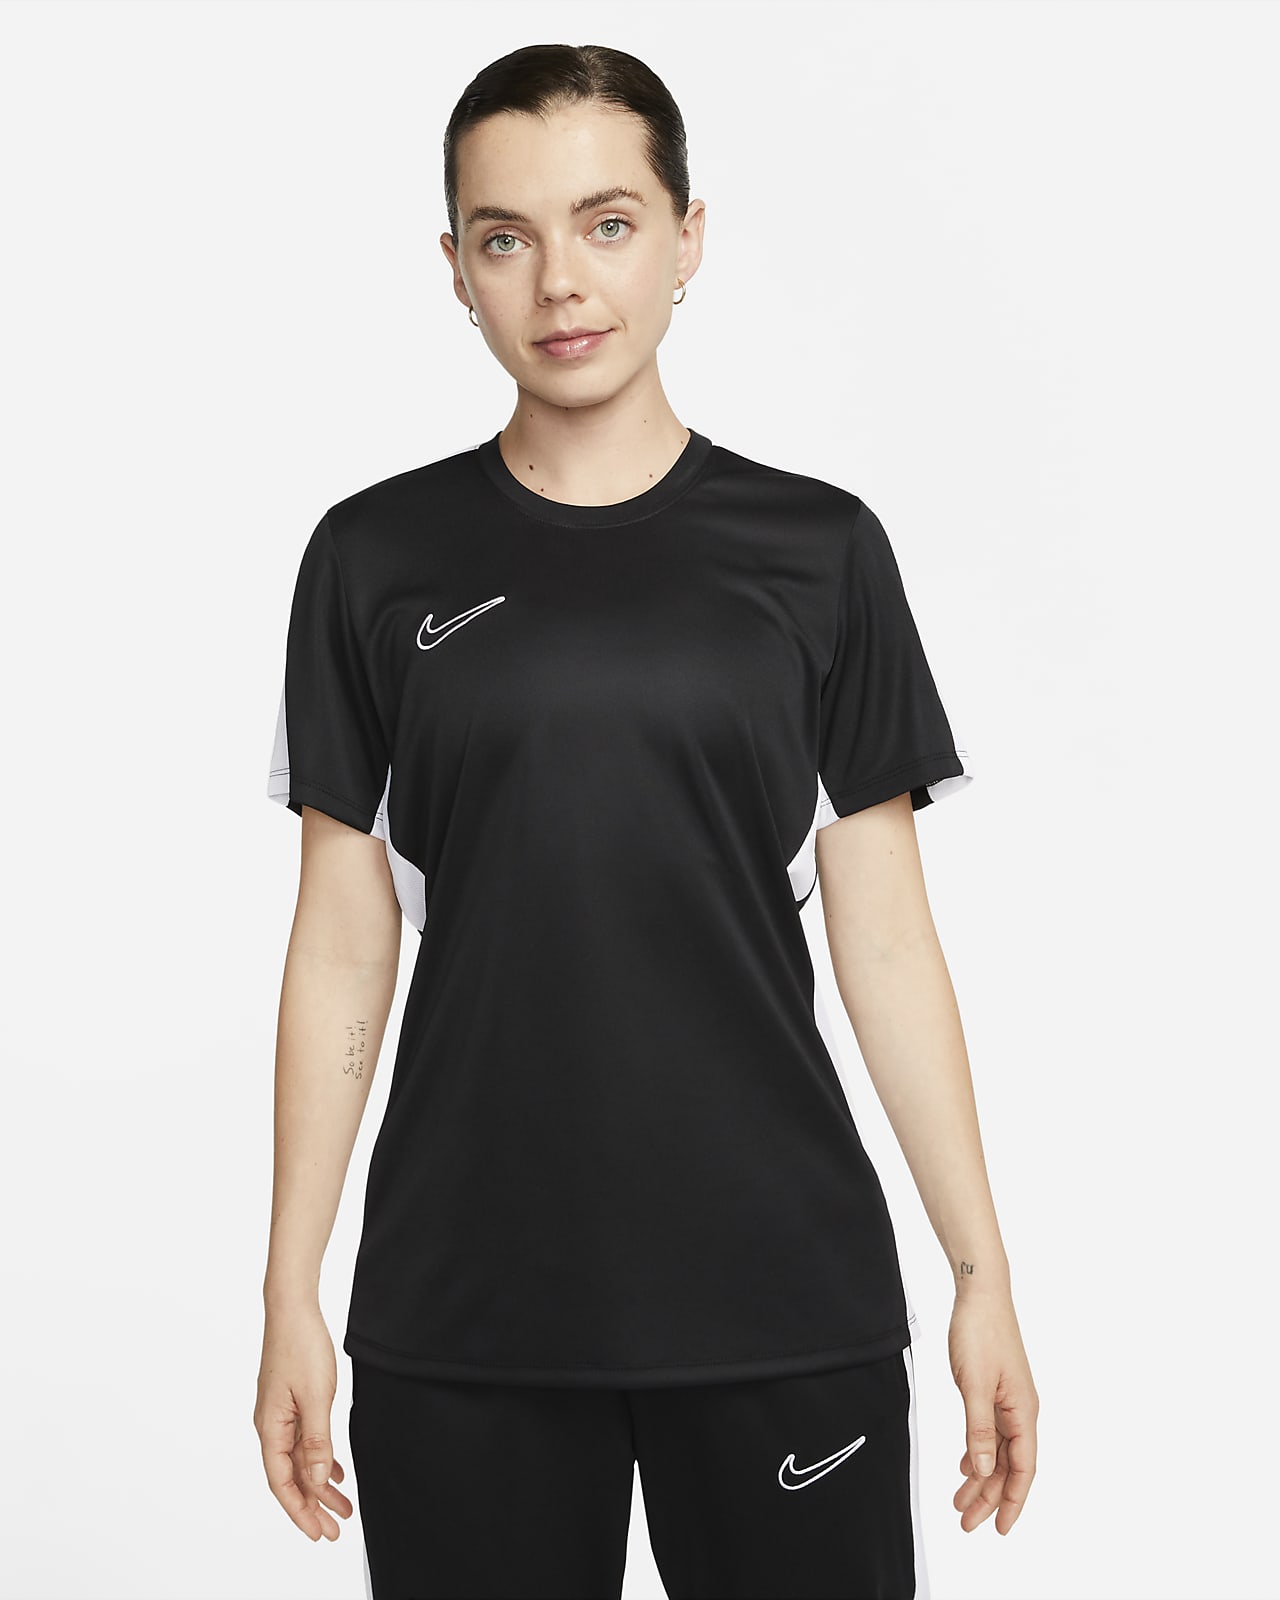 Nike Dri-FIT Academy rövid ujjú női futballfelső